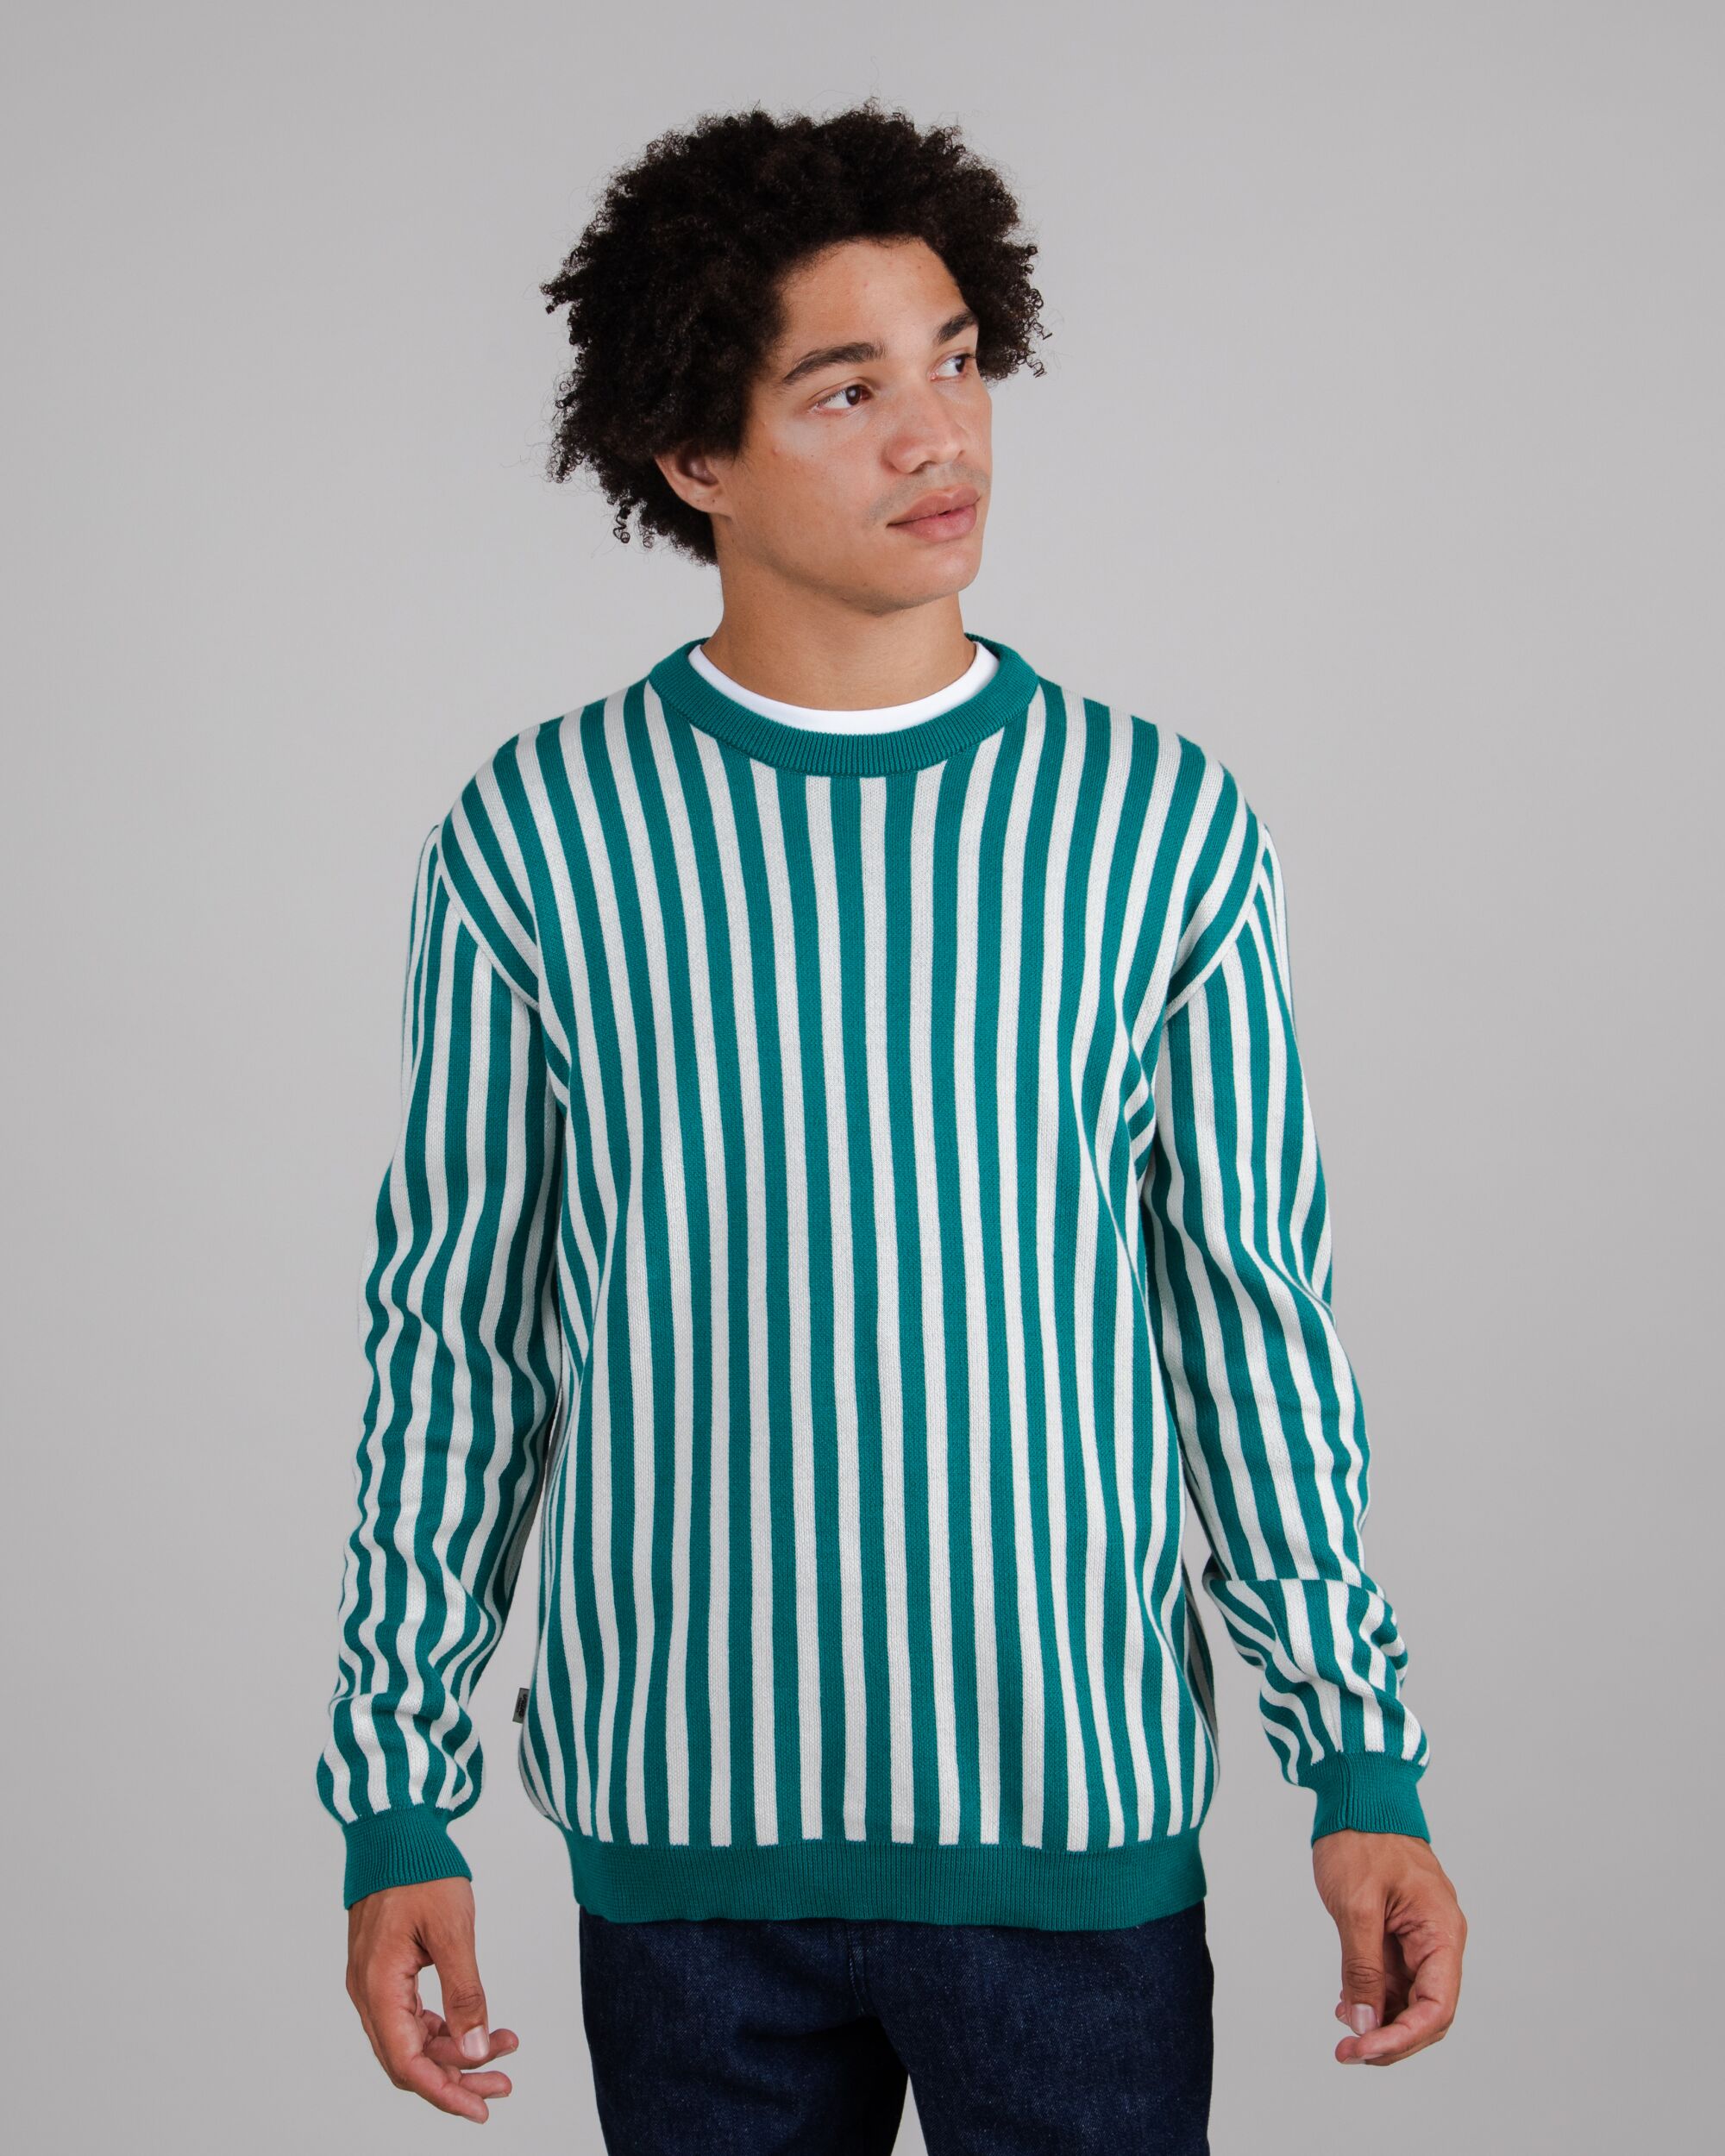 Sweater Stripes Green made of organic cotton from Brava Fabrics